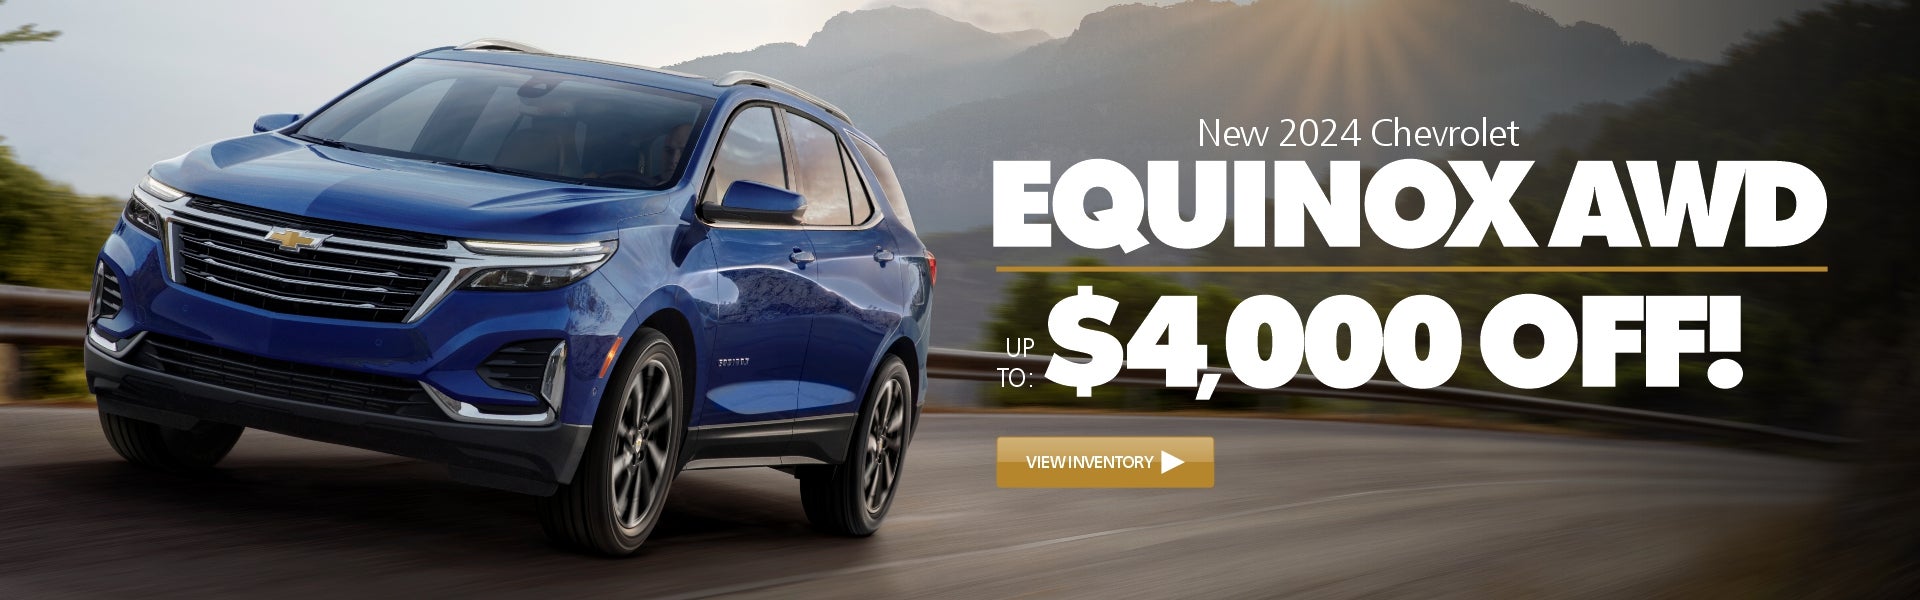 New 2024 Chevrolet Equinox AWD